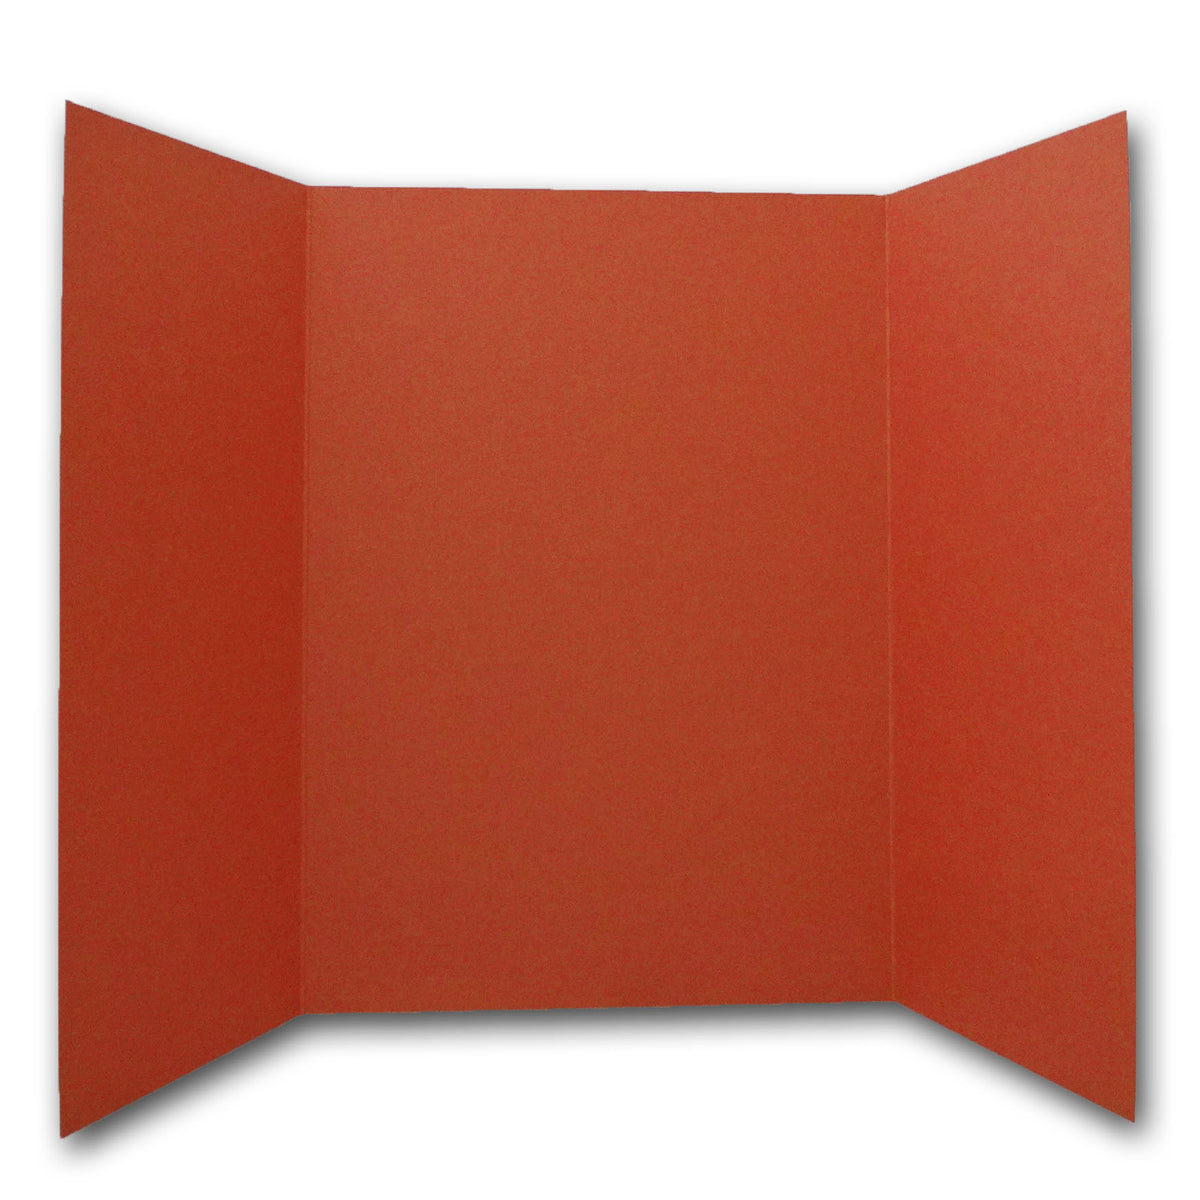 Burnt Orange 5x7 Gate Fold Discount Card Stock for DIY Invitations